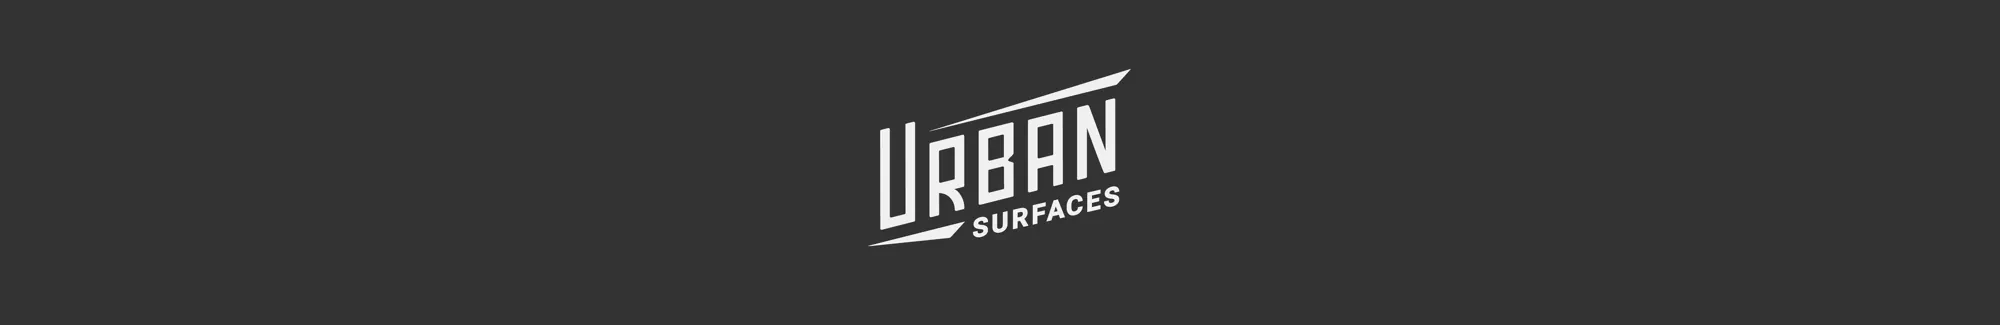 Urban Surfaces logo on dark gray background.